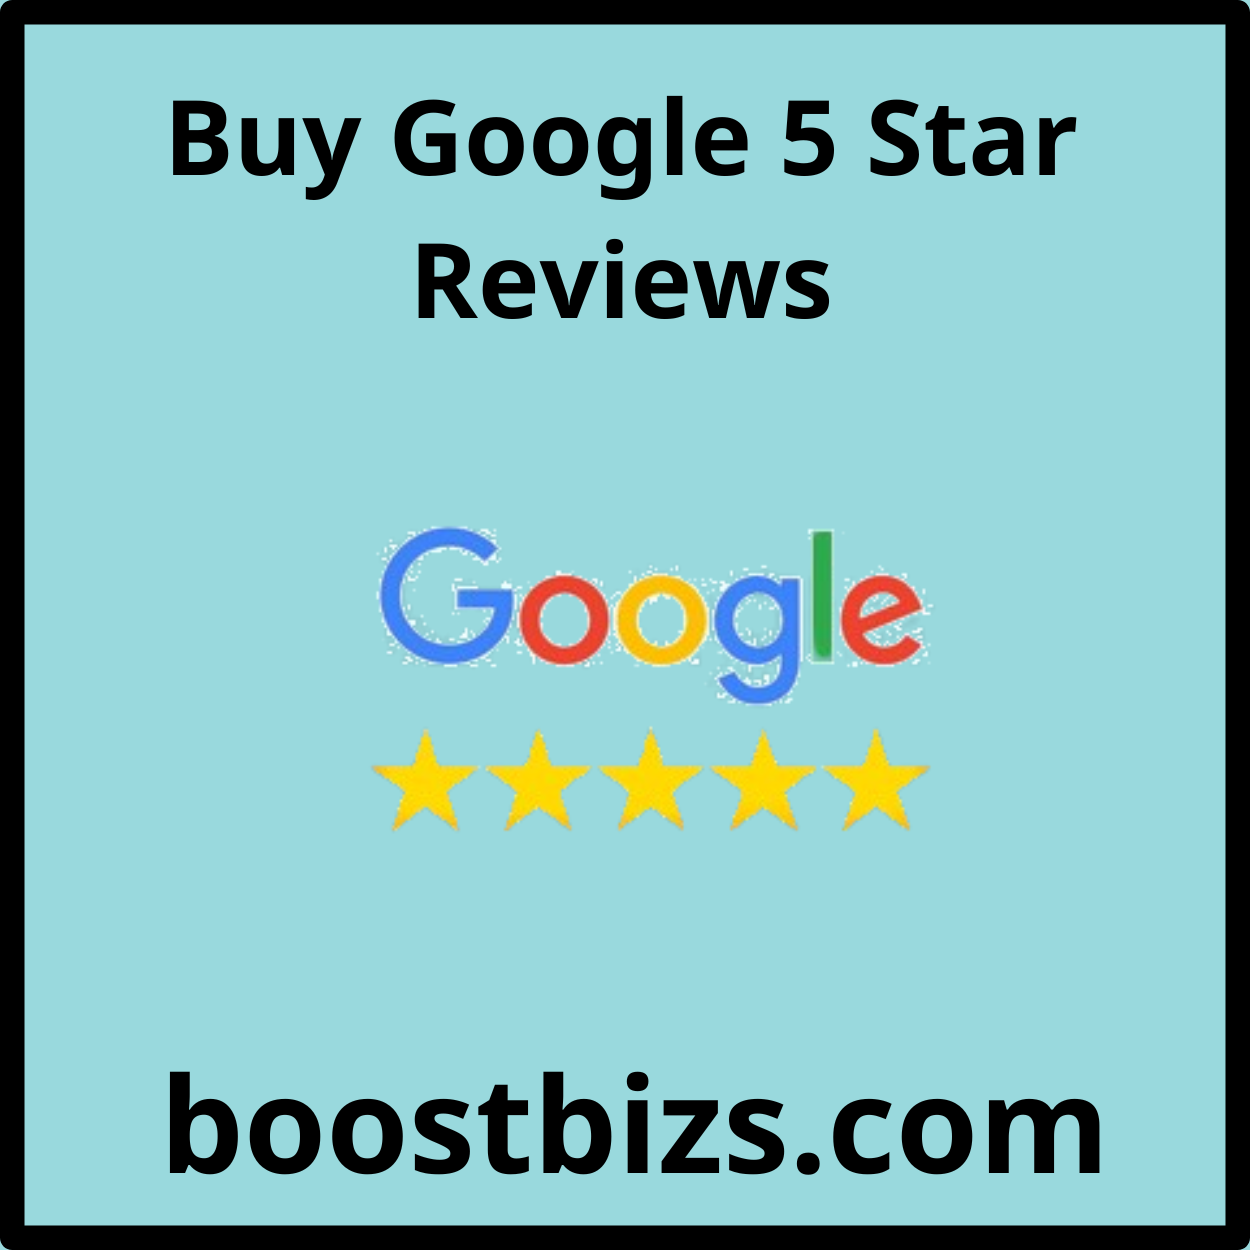 Buy Google 5 Star Reviews - BOOSTBIZS